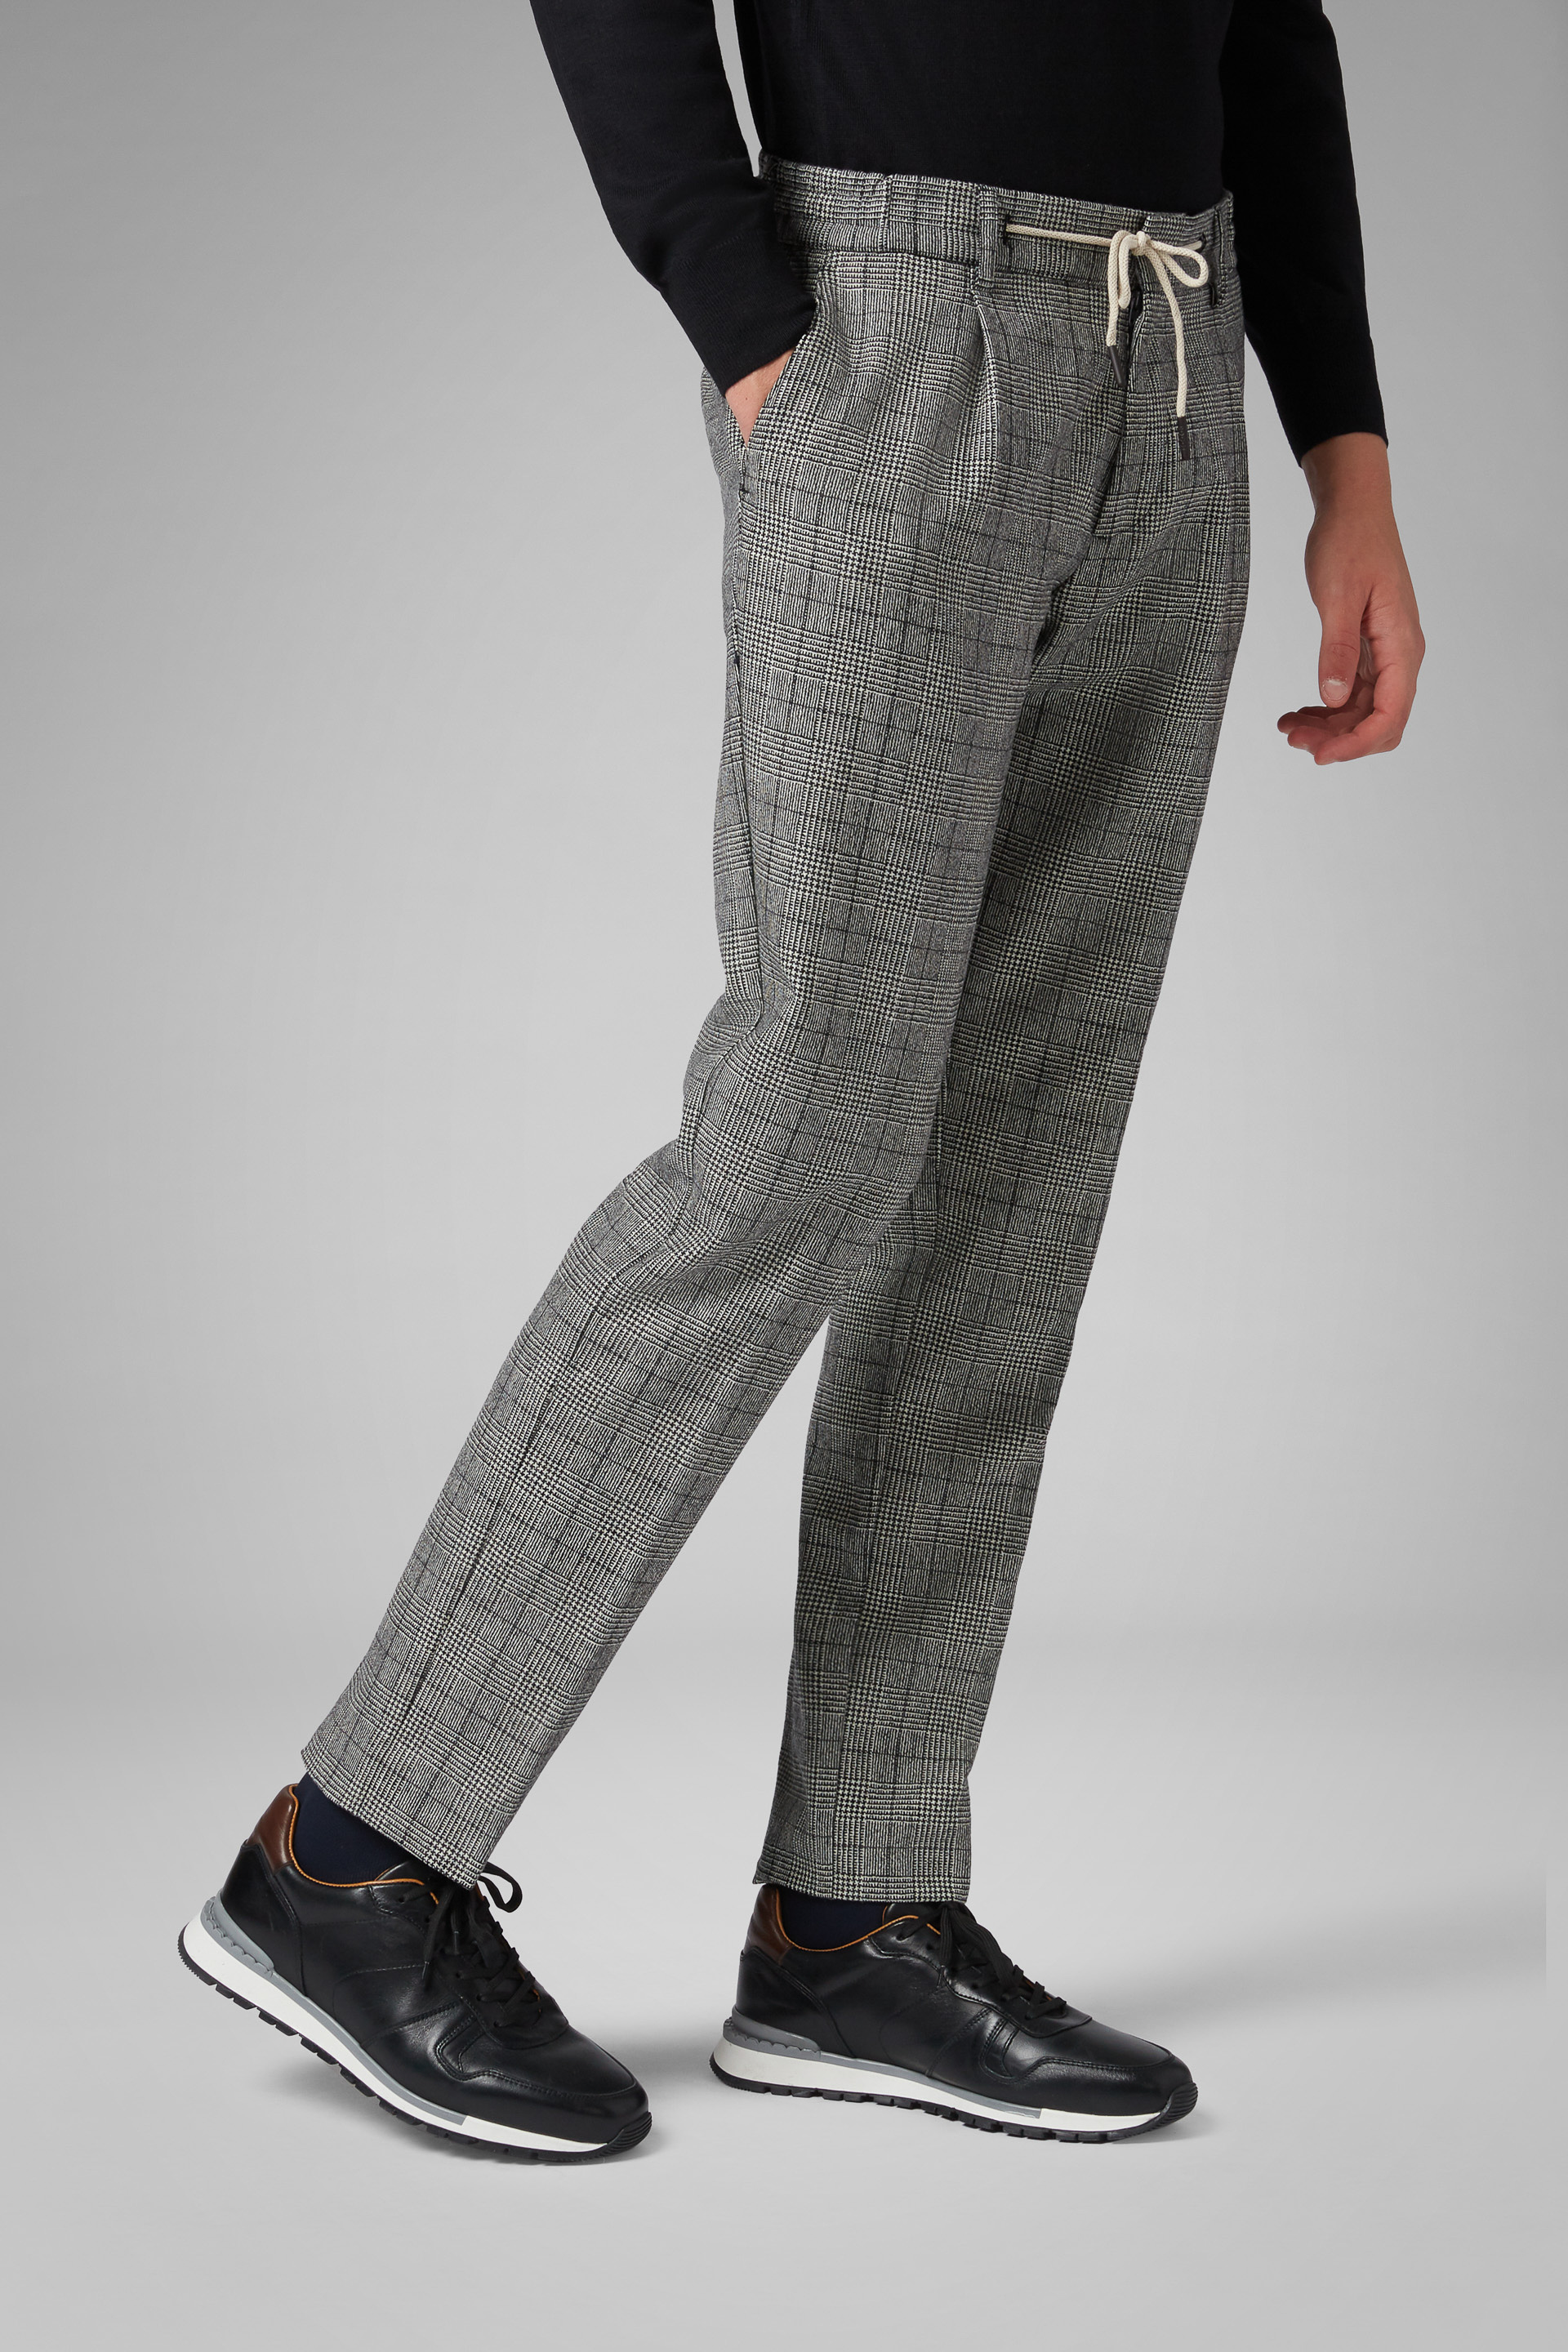 Mens Trousers  Flannel Chino Smart  Wool Cotton Linen  Gentlemans  Journal Shop